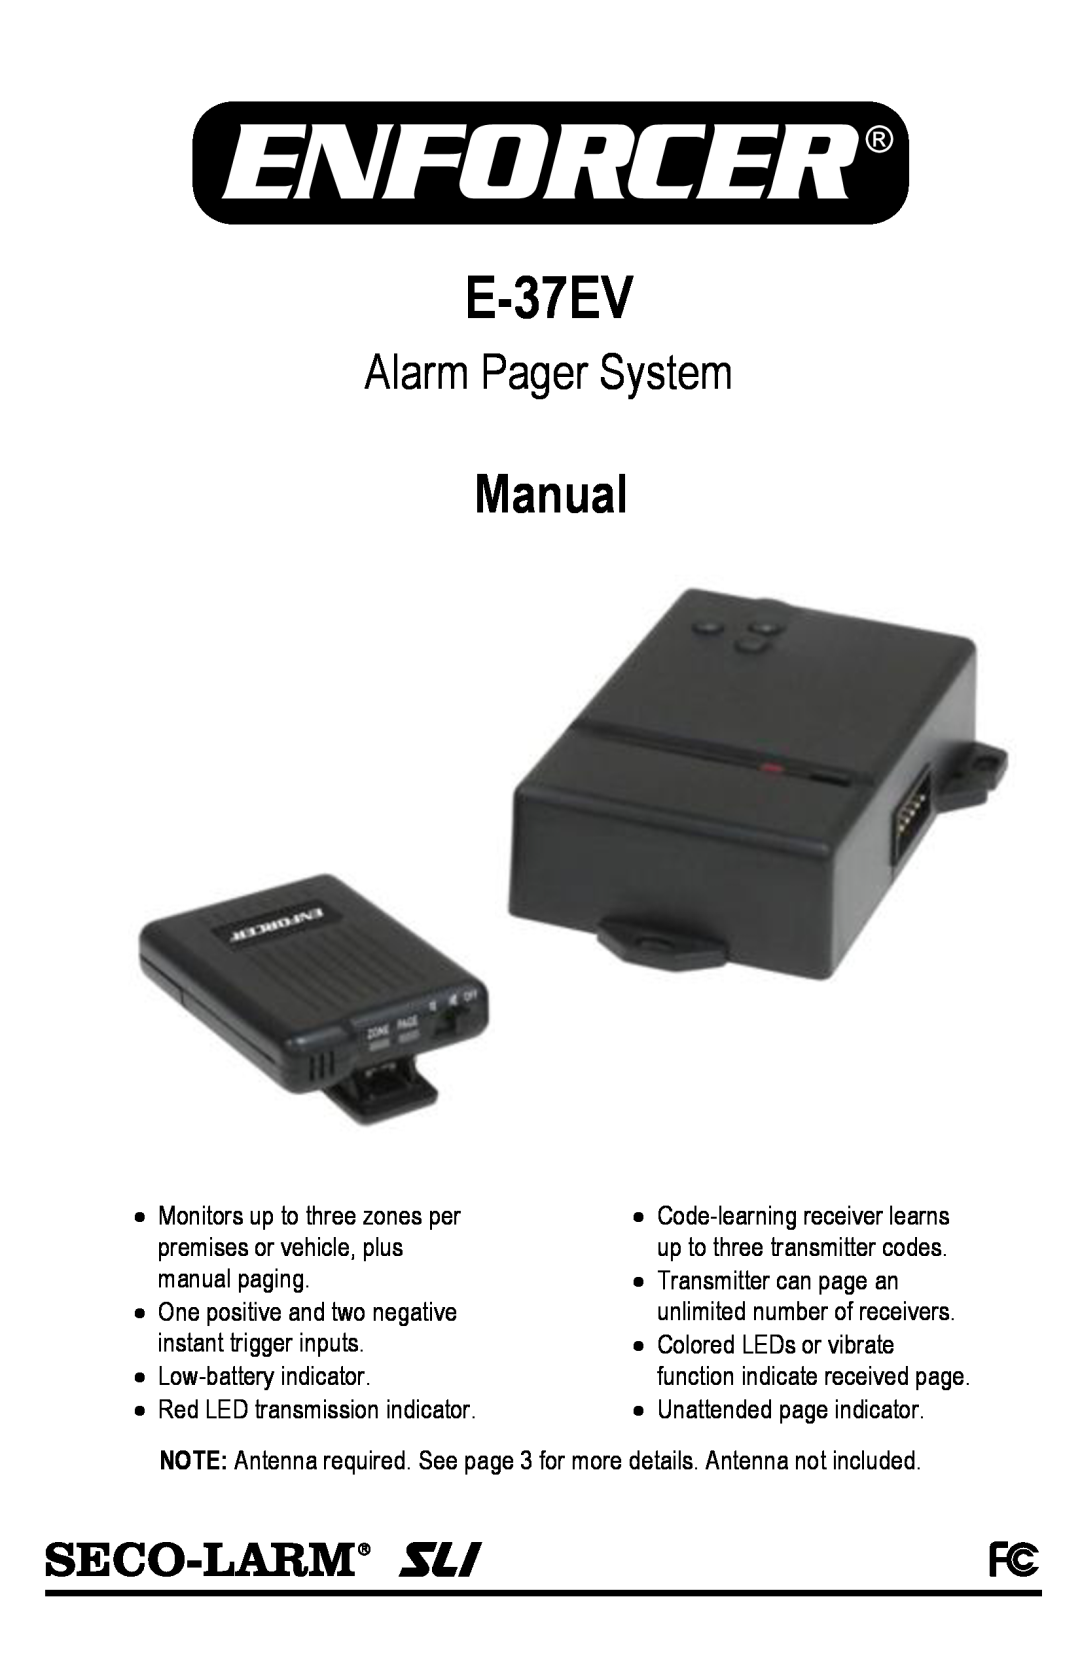 SECO-LARM USA E-37EV manual Manual, Alarm Pager System 